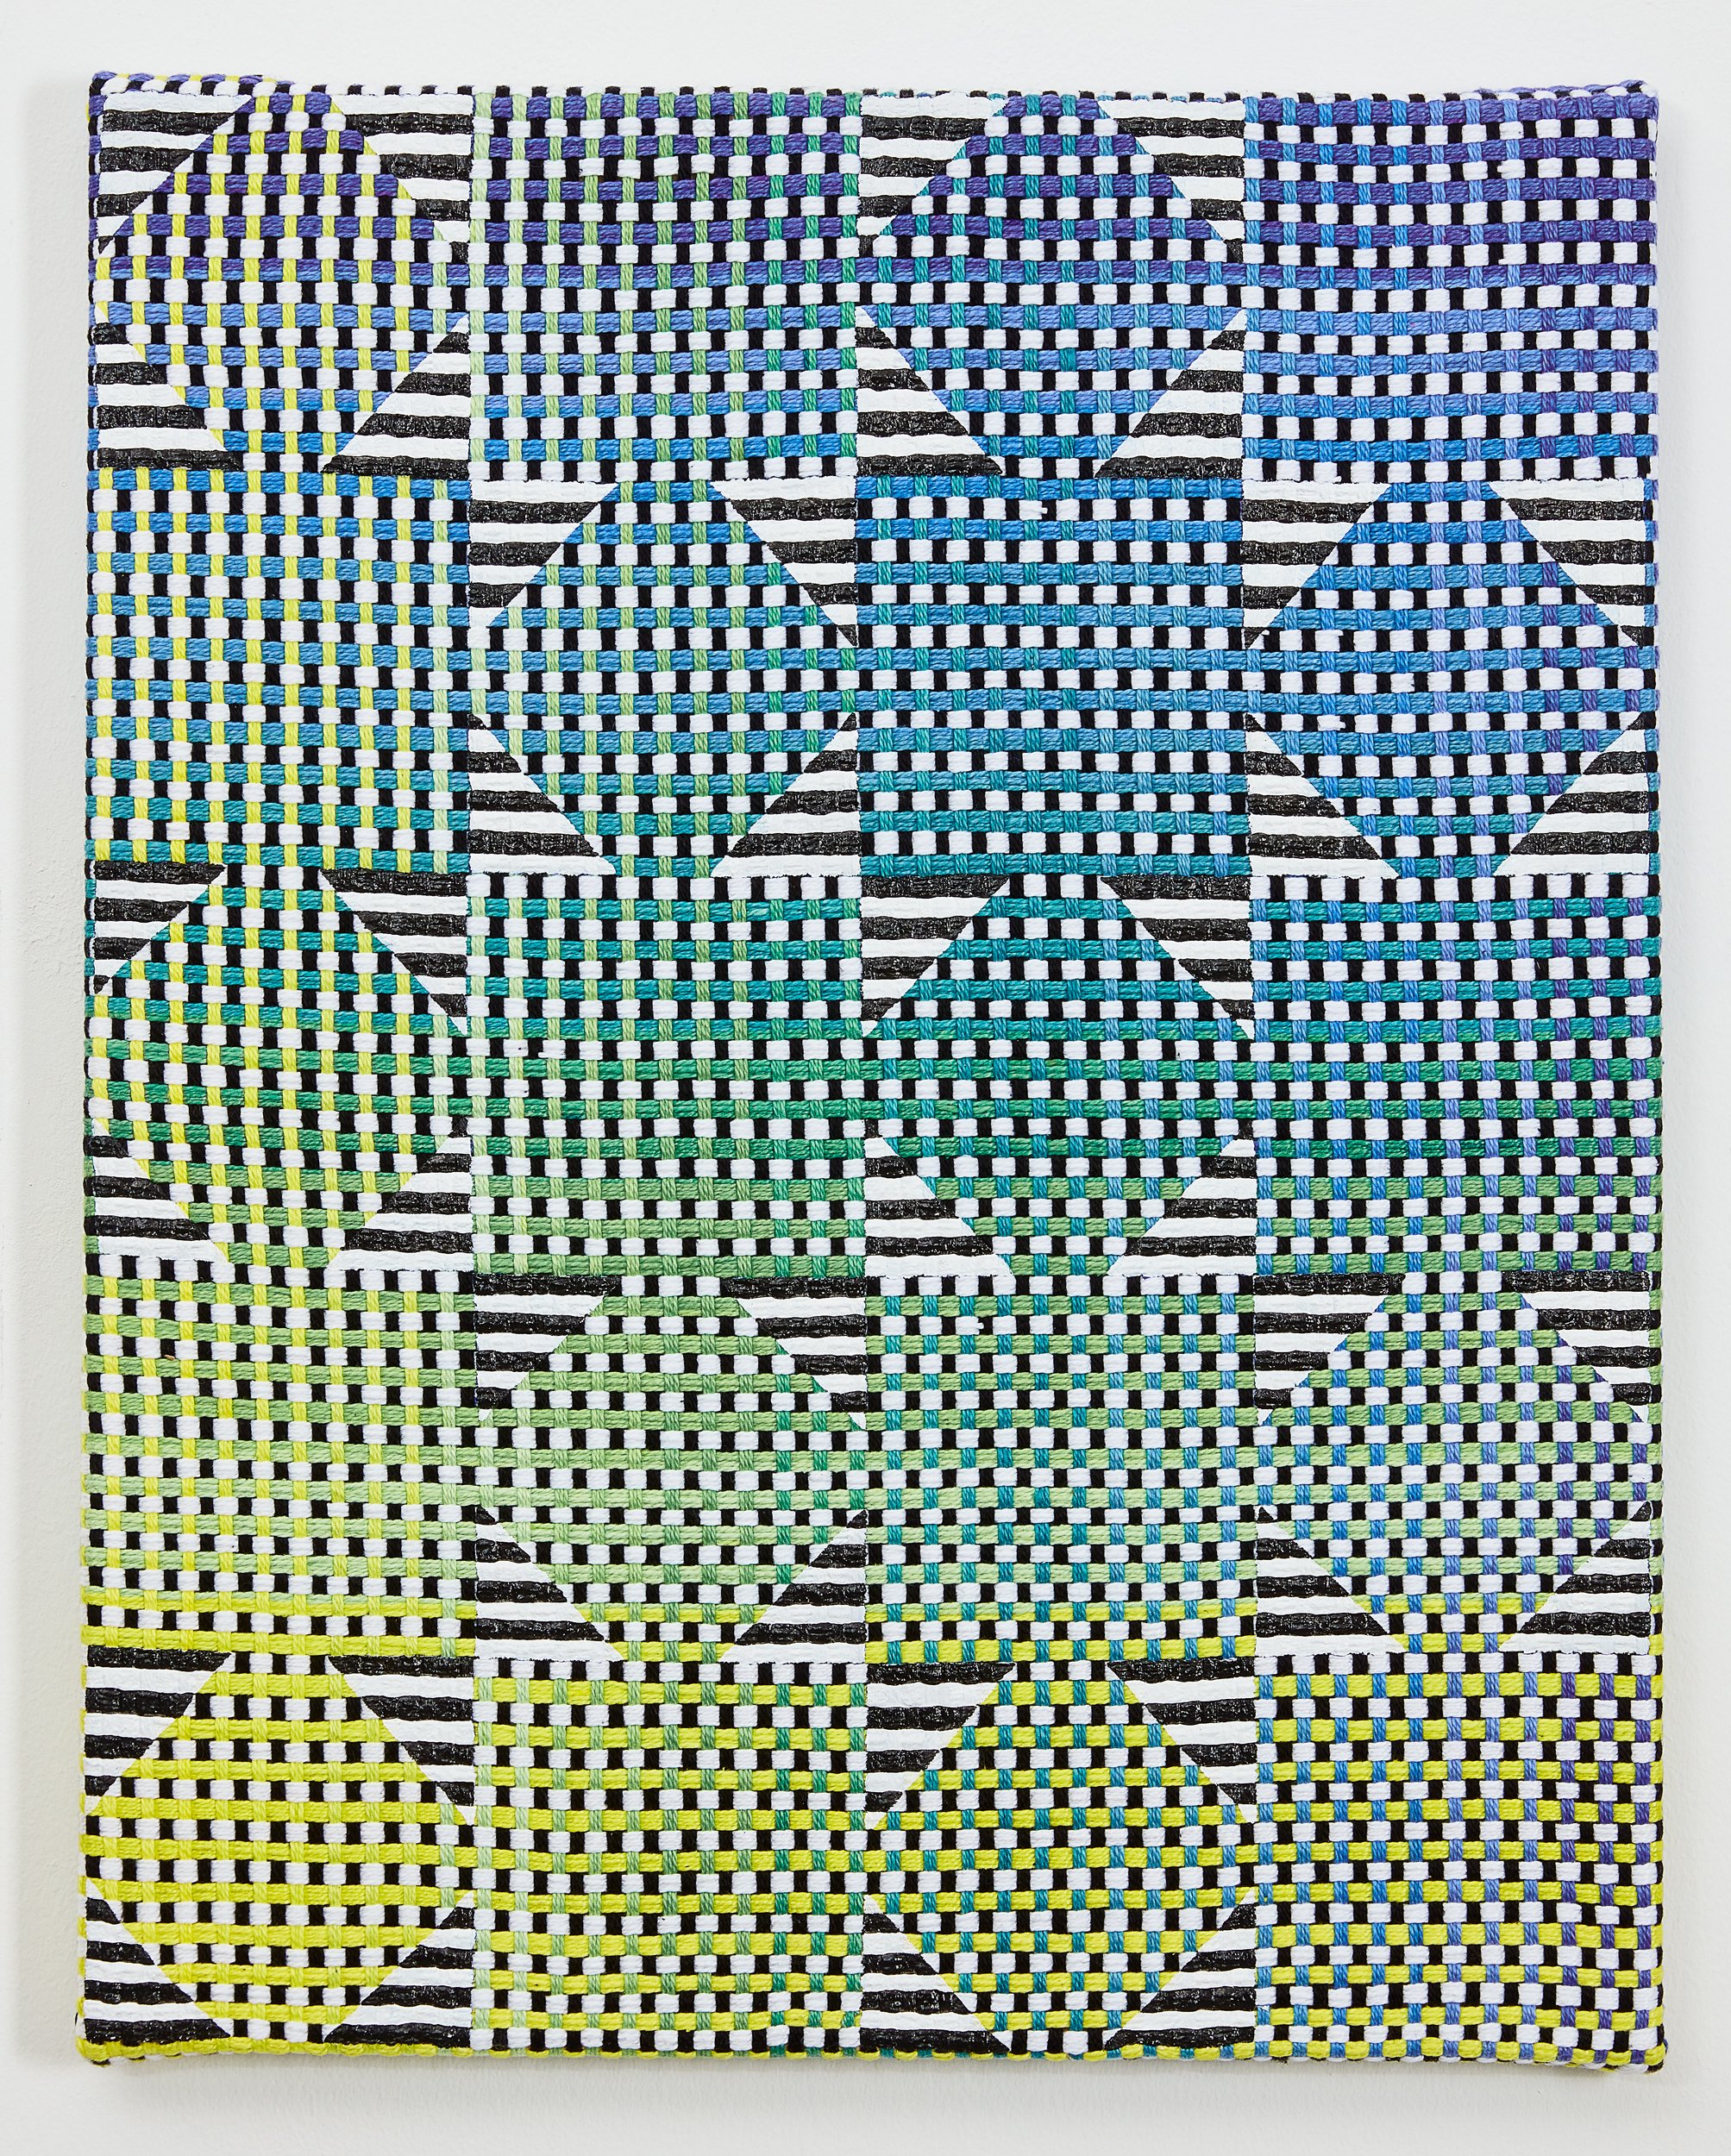 Samantha Bittman, Untitled, 2019, acrylic on hand-woven textile, 20 x 16 in, 50.8 x 40.6 cm, (SBi302535) LR